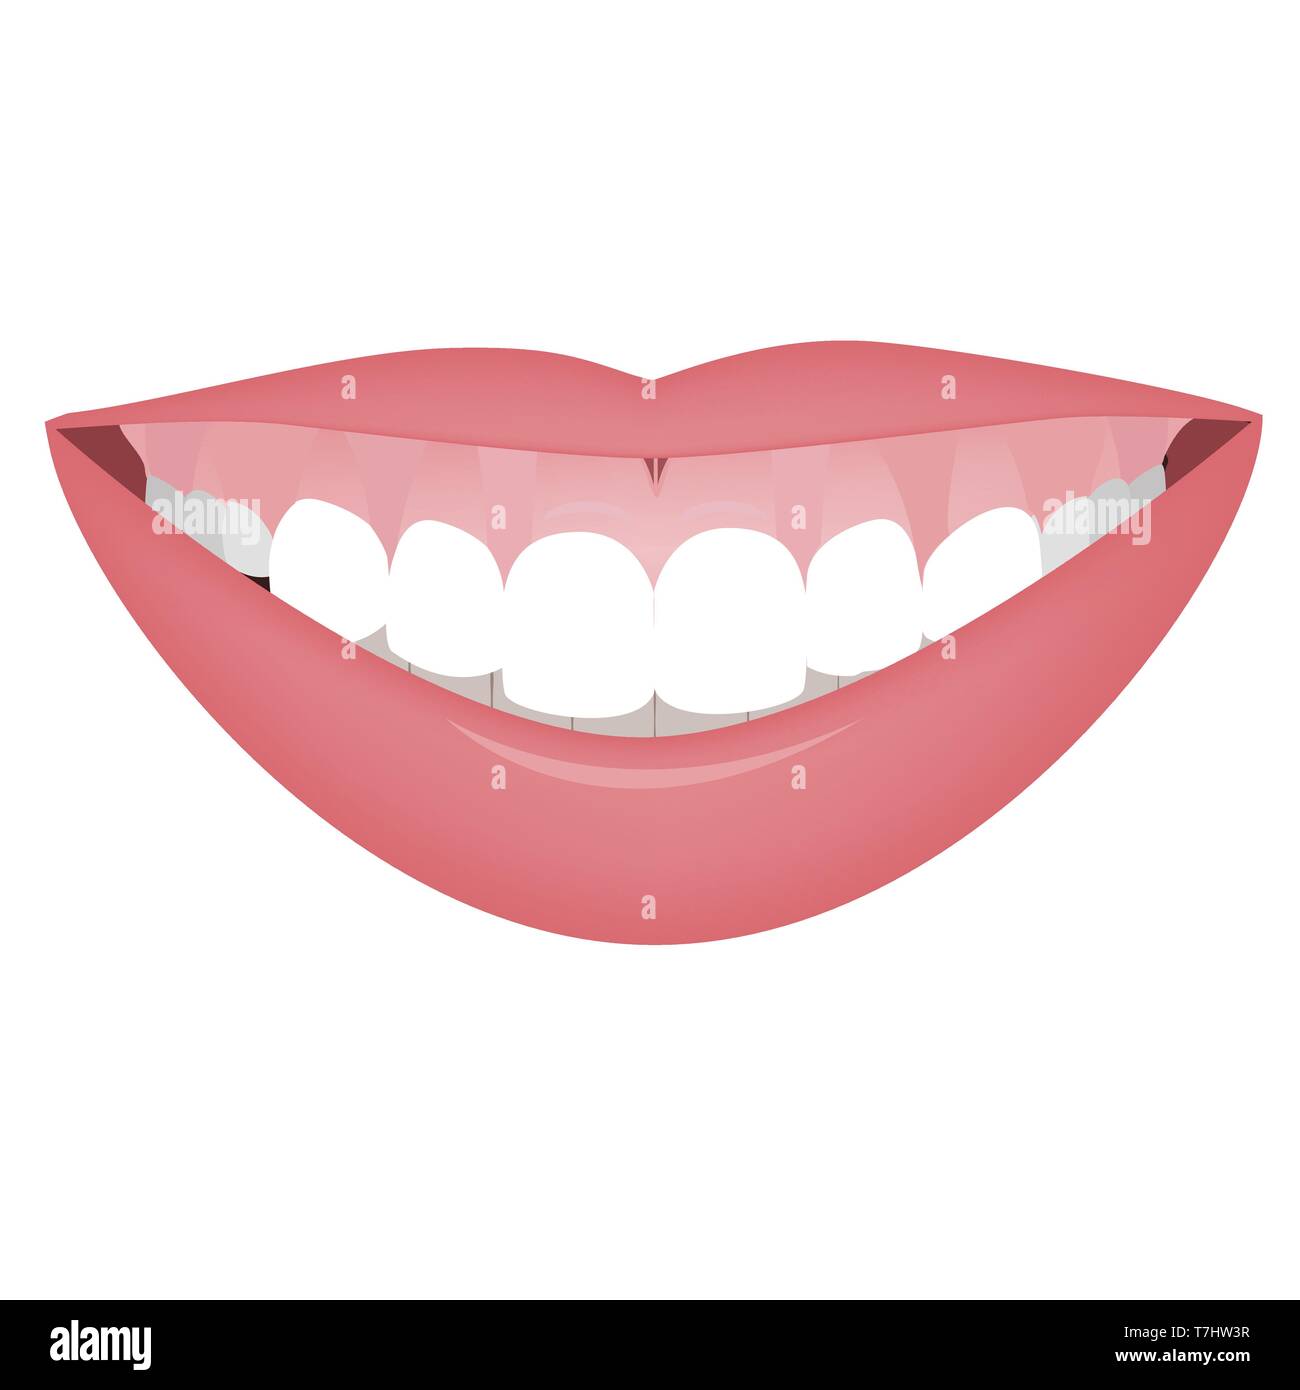 Mund mit einem hohen Lächeln oder gummiartiges Lächeln vor der Kosmetik, orthotropics orthotropics oder Korrektur. Vector Illustration Stock Vektor